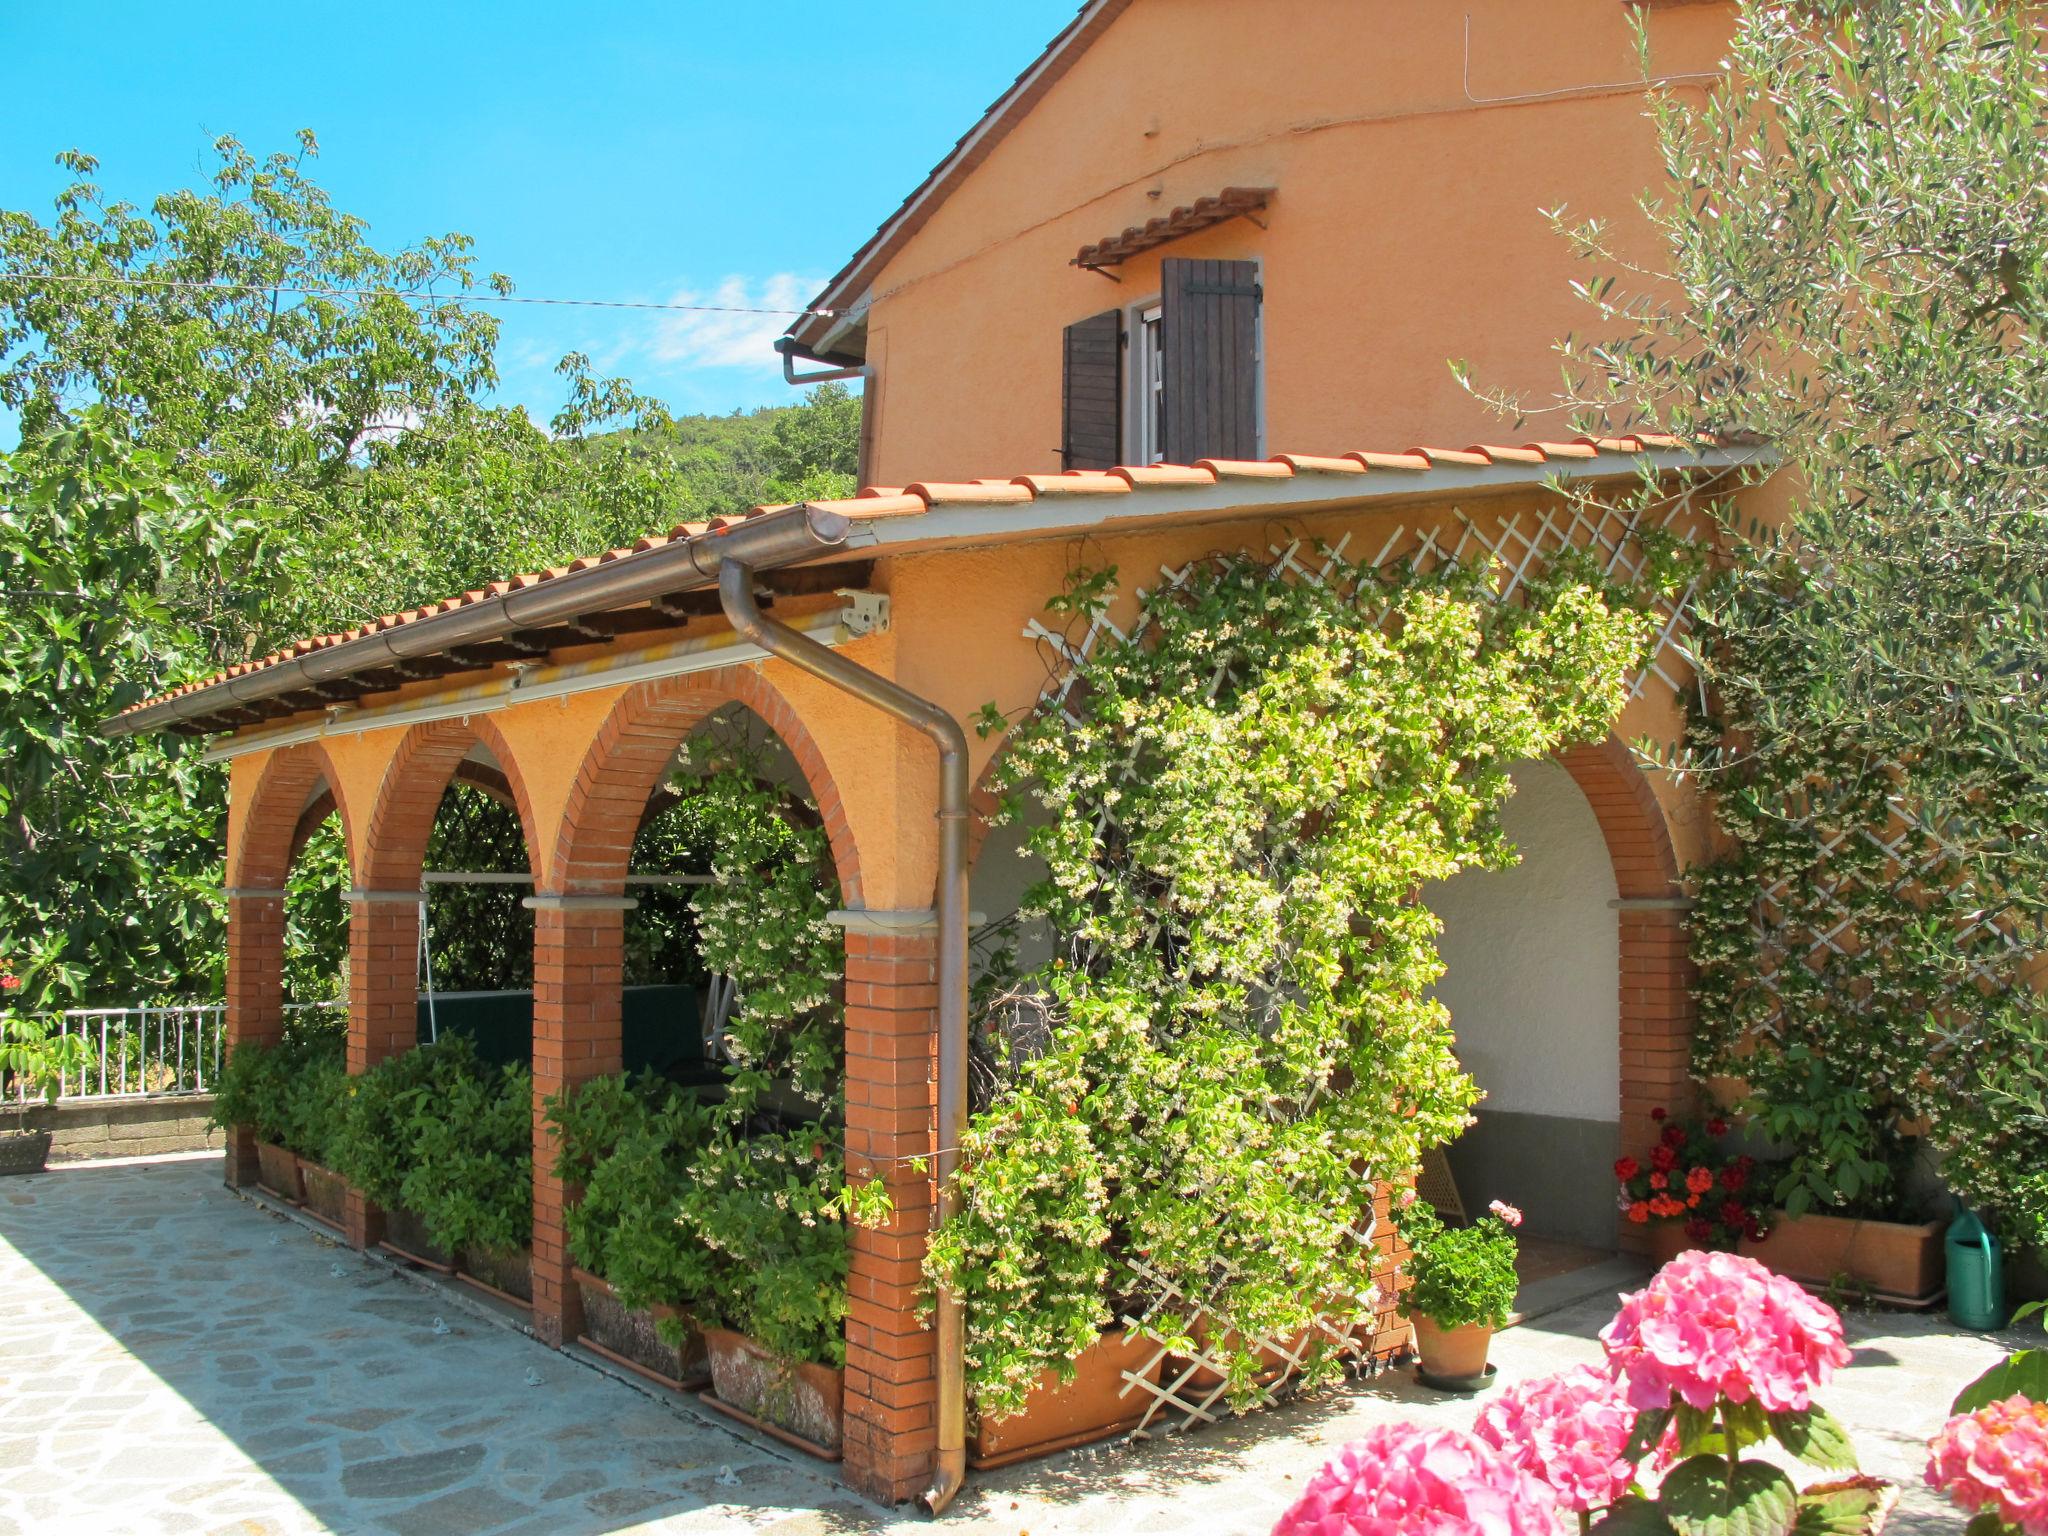 Photo 2 - 3 bedroom House in Castiglion Fiorentino with private pool and garden